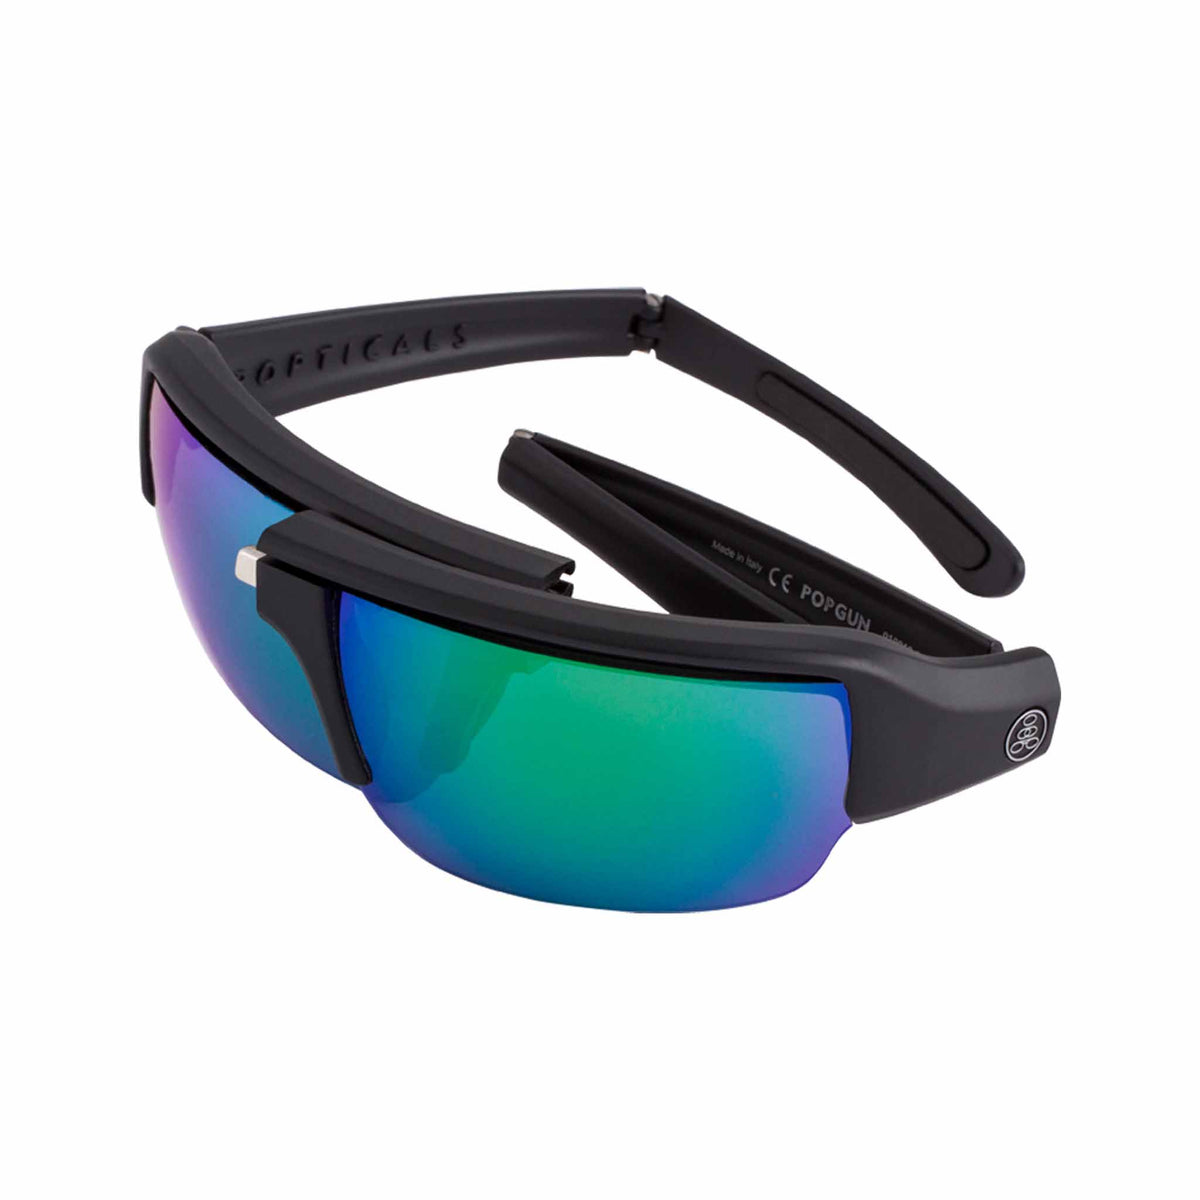 Popticals, Premium Compact Sunglasses, PopGun, 010010-BMEN, Polarized Sunglasses, Matte Black Frame, Gray Lenses w/Green Mirror, Spider View